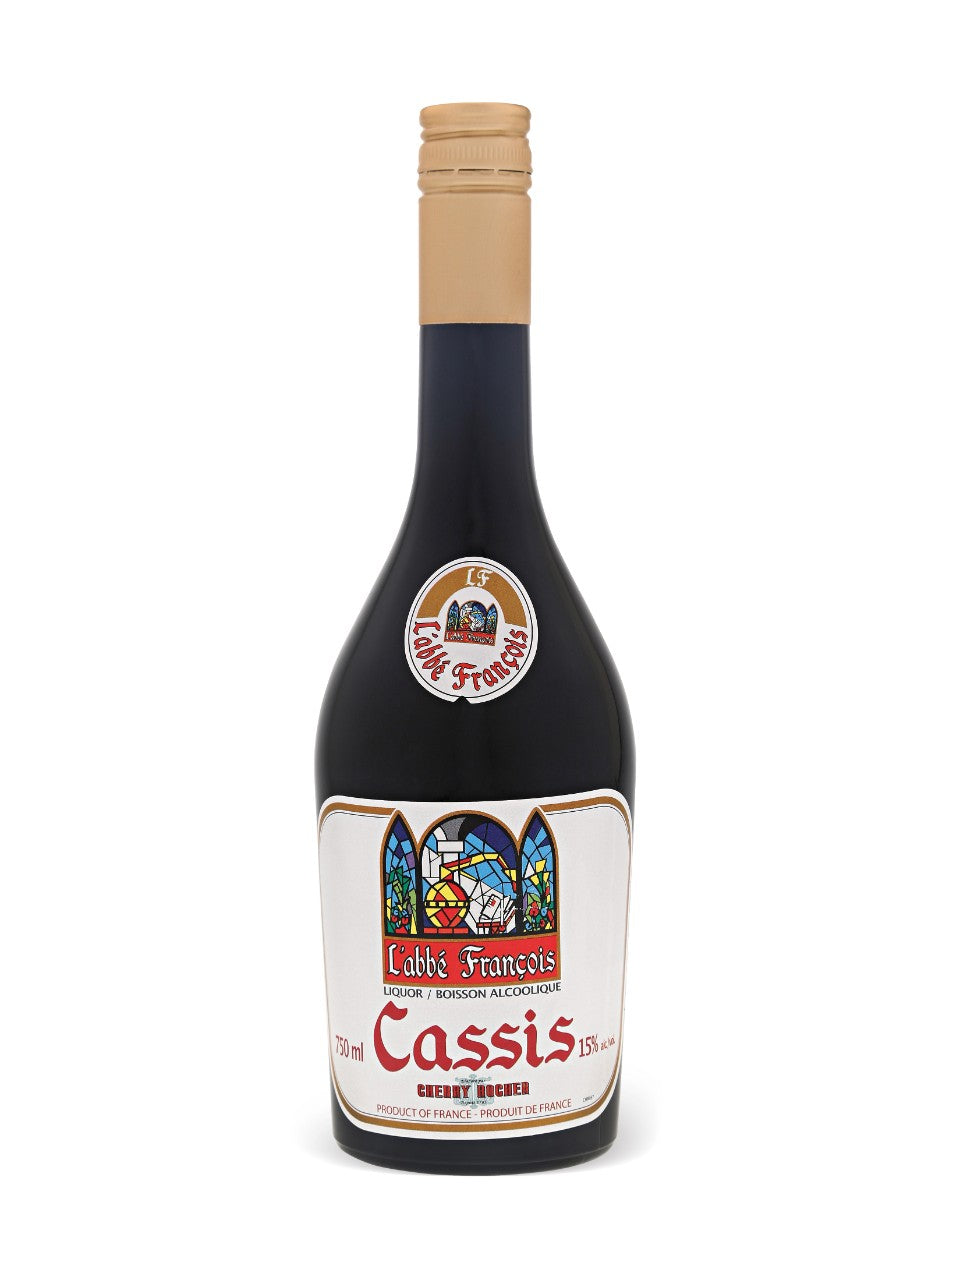 Labbe Francois Cassis 750 mL bottle